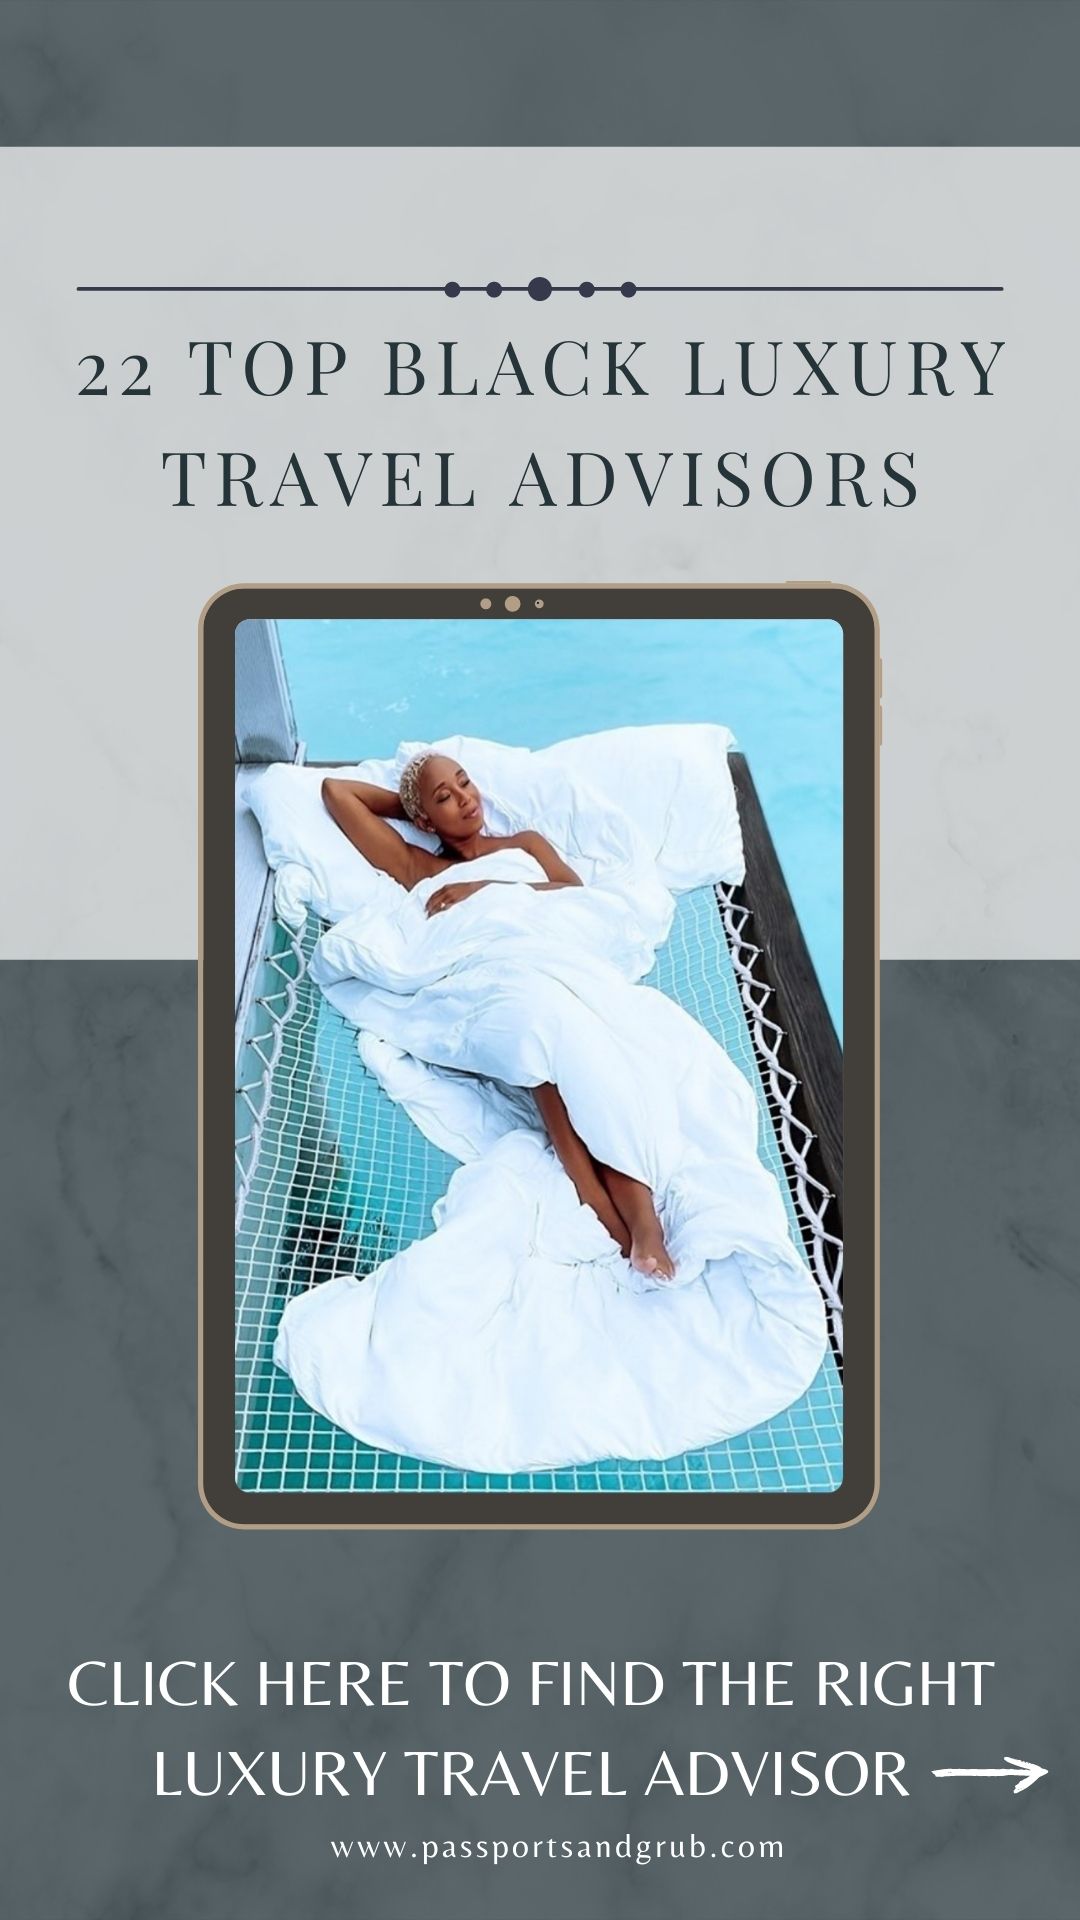 Black luxury travel advisors